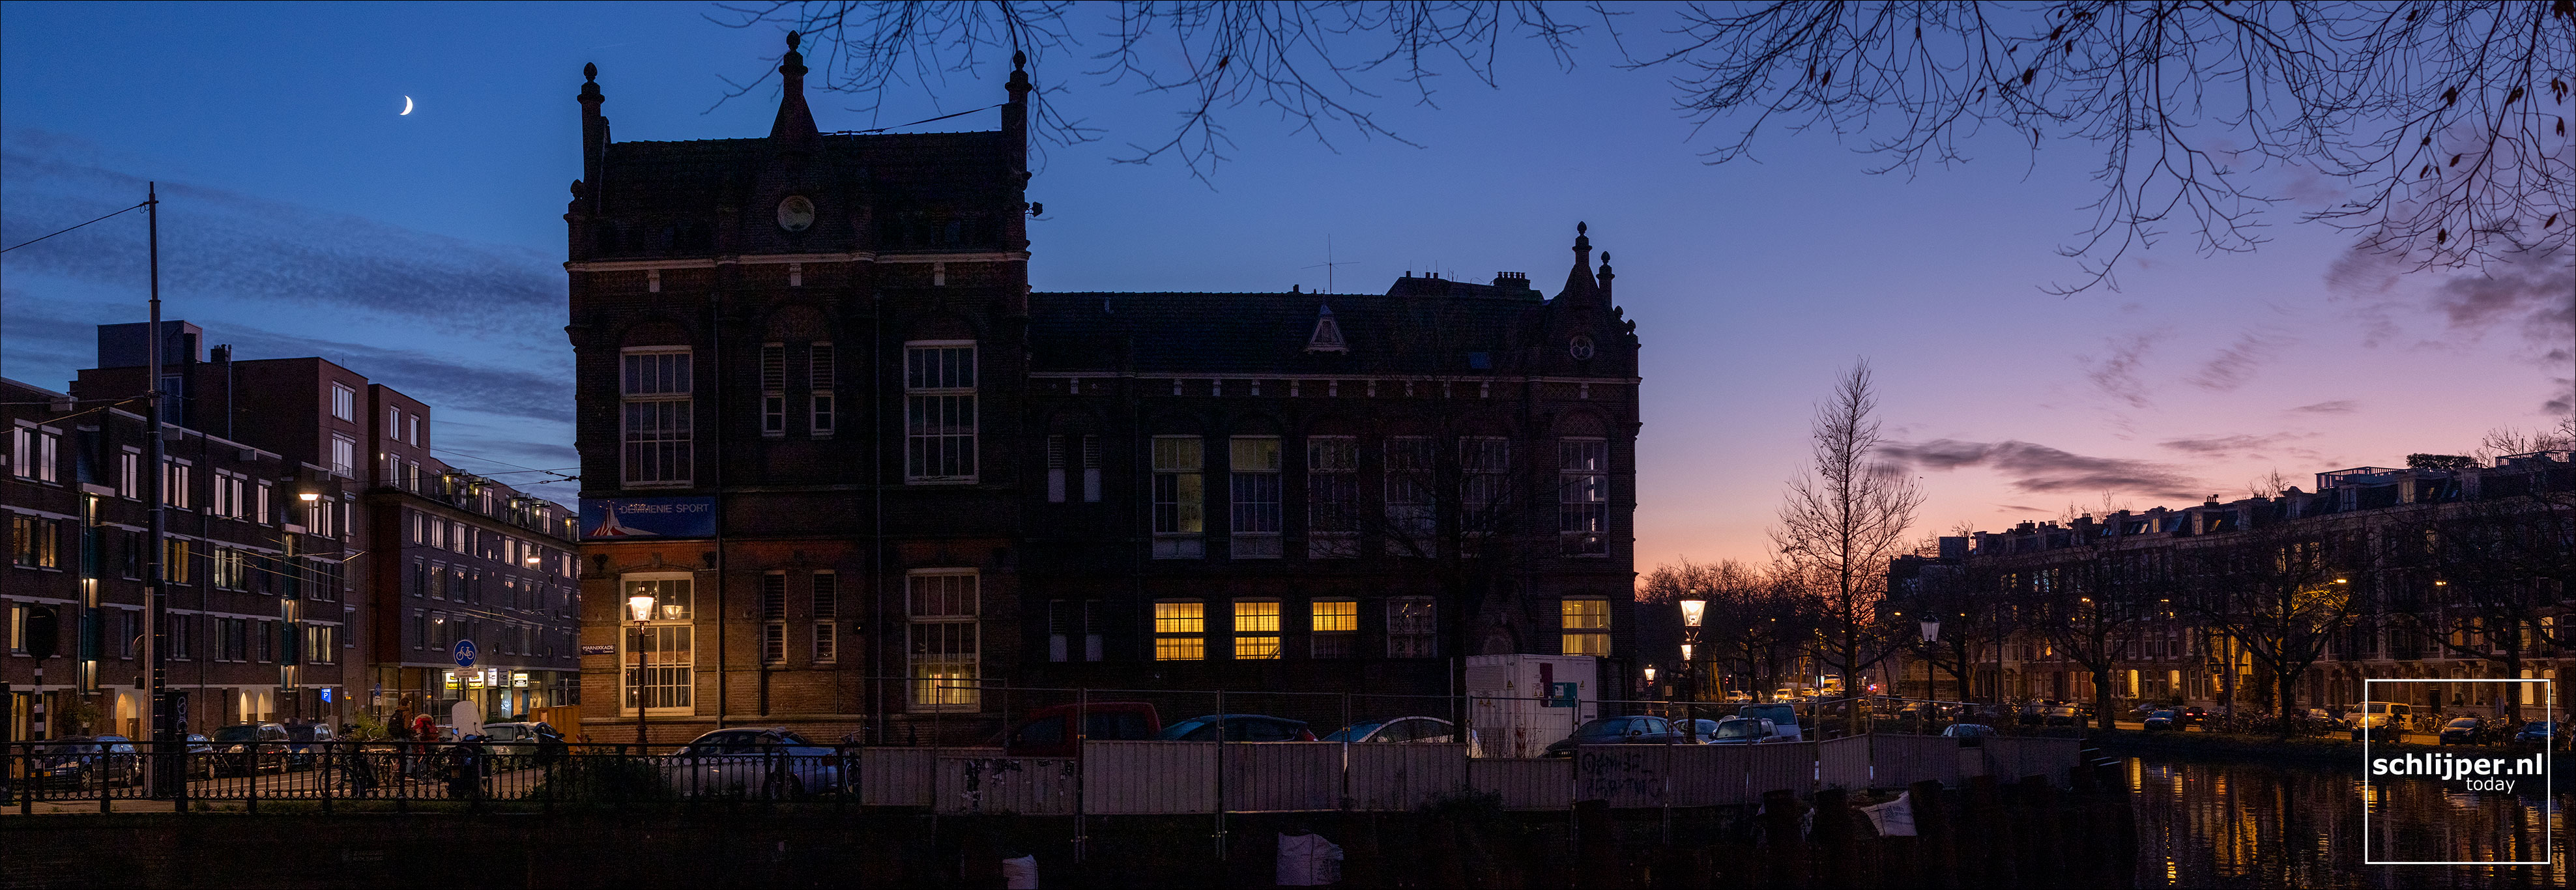 Nederland, Amsterdam, 1 december 2019